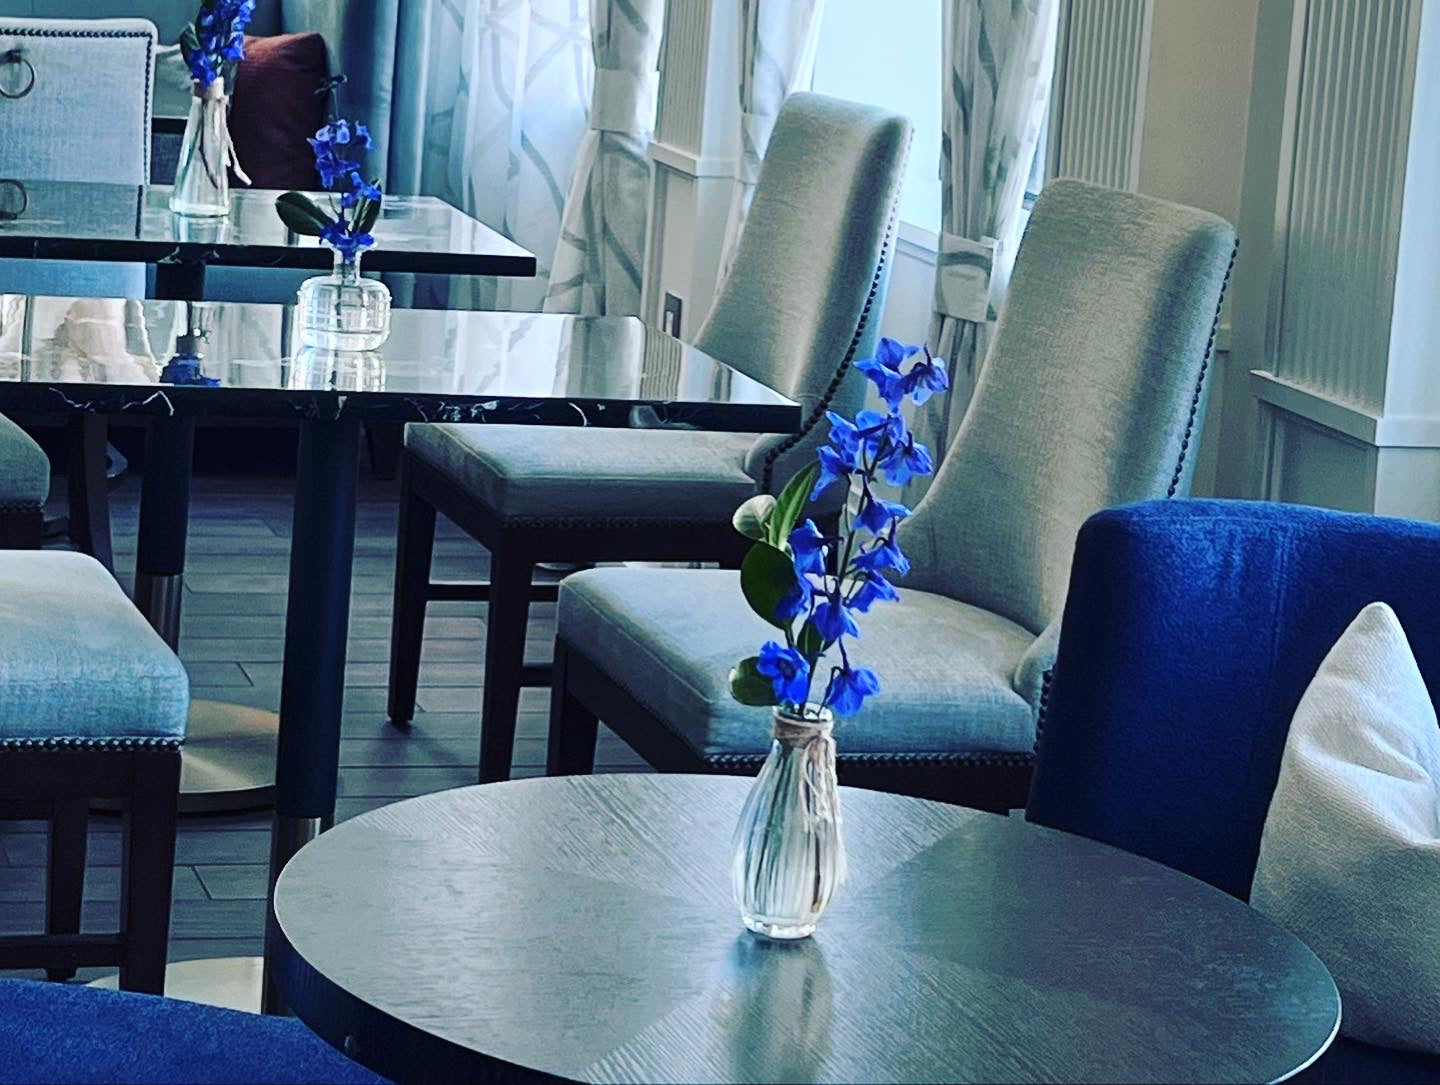 Restaurant florals, Charleston. Florals in bar. Hospitality florals. Charleston hospitality florist. Beautiful blue flowers in Loutrel bar. Charleston hotel florist.